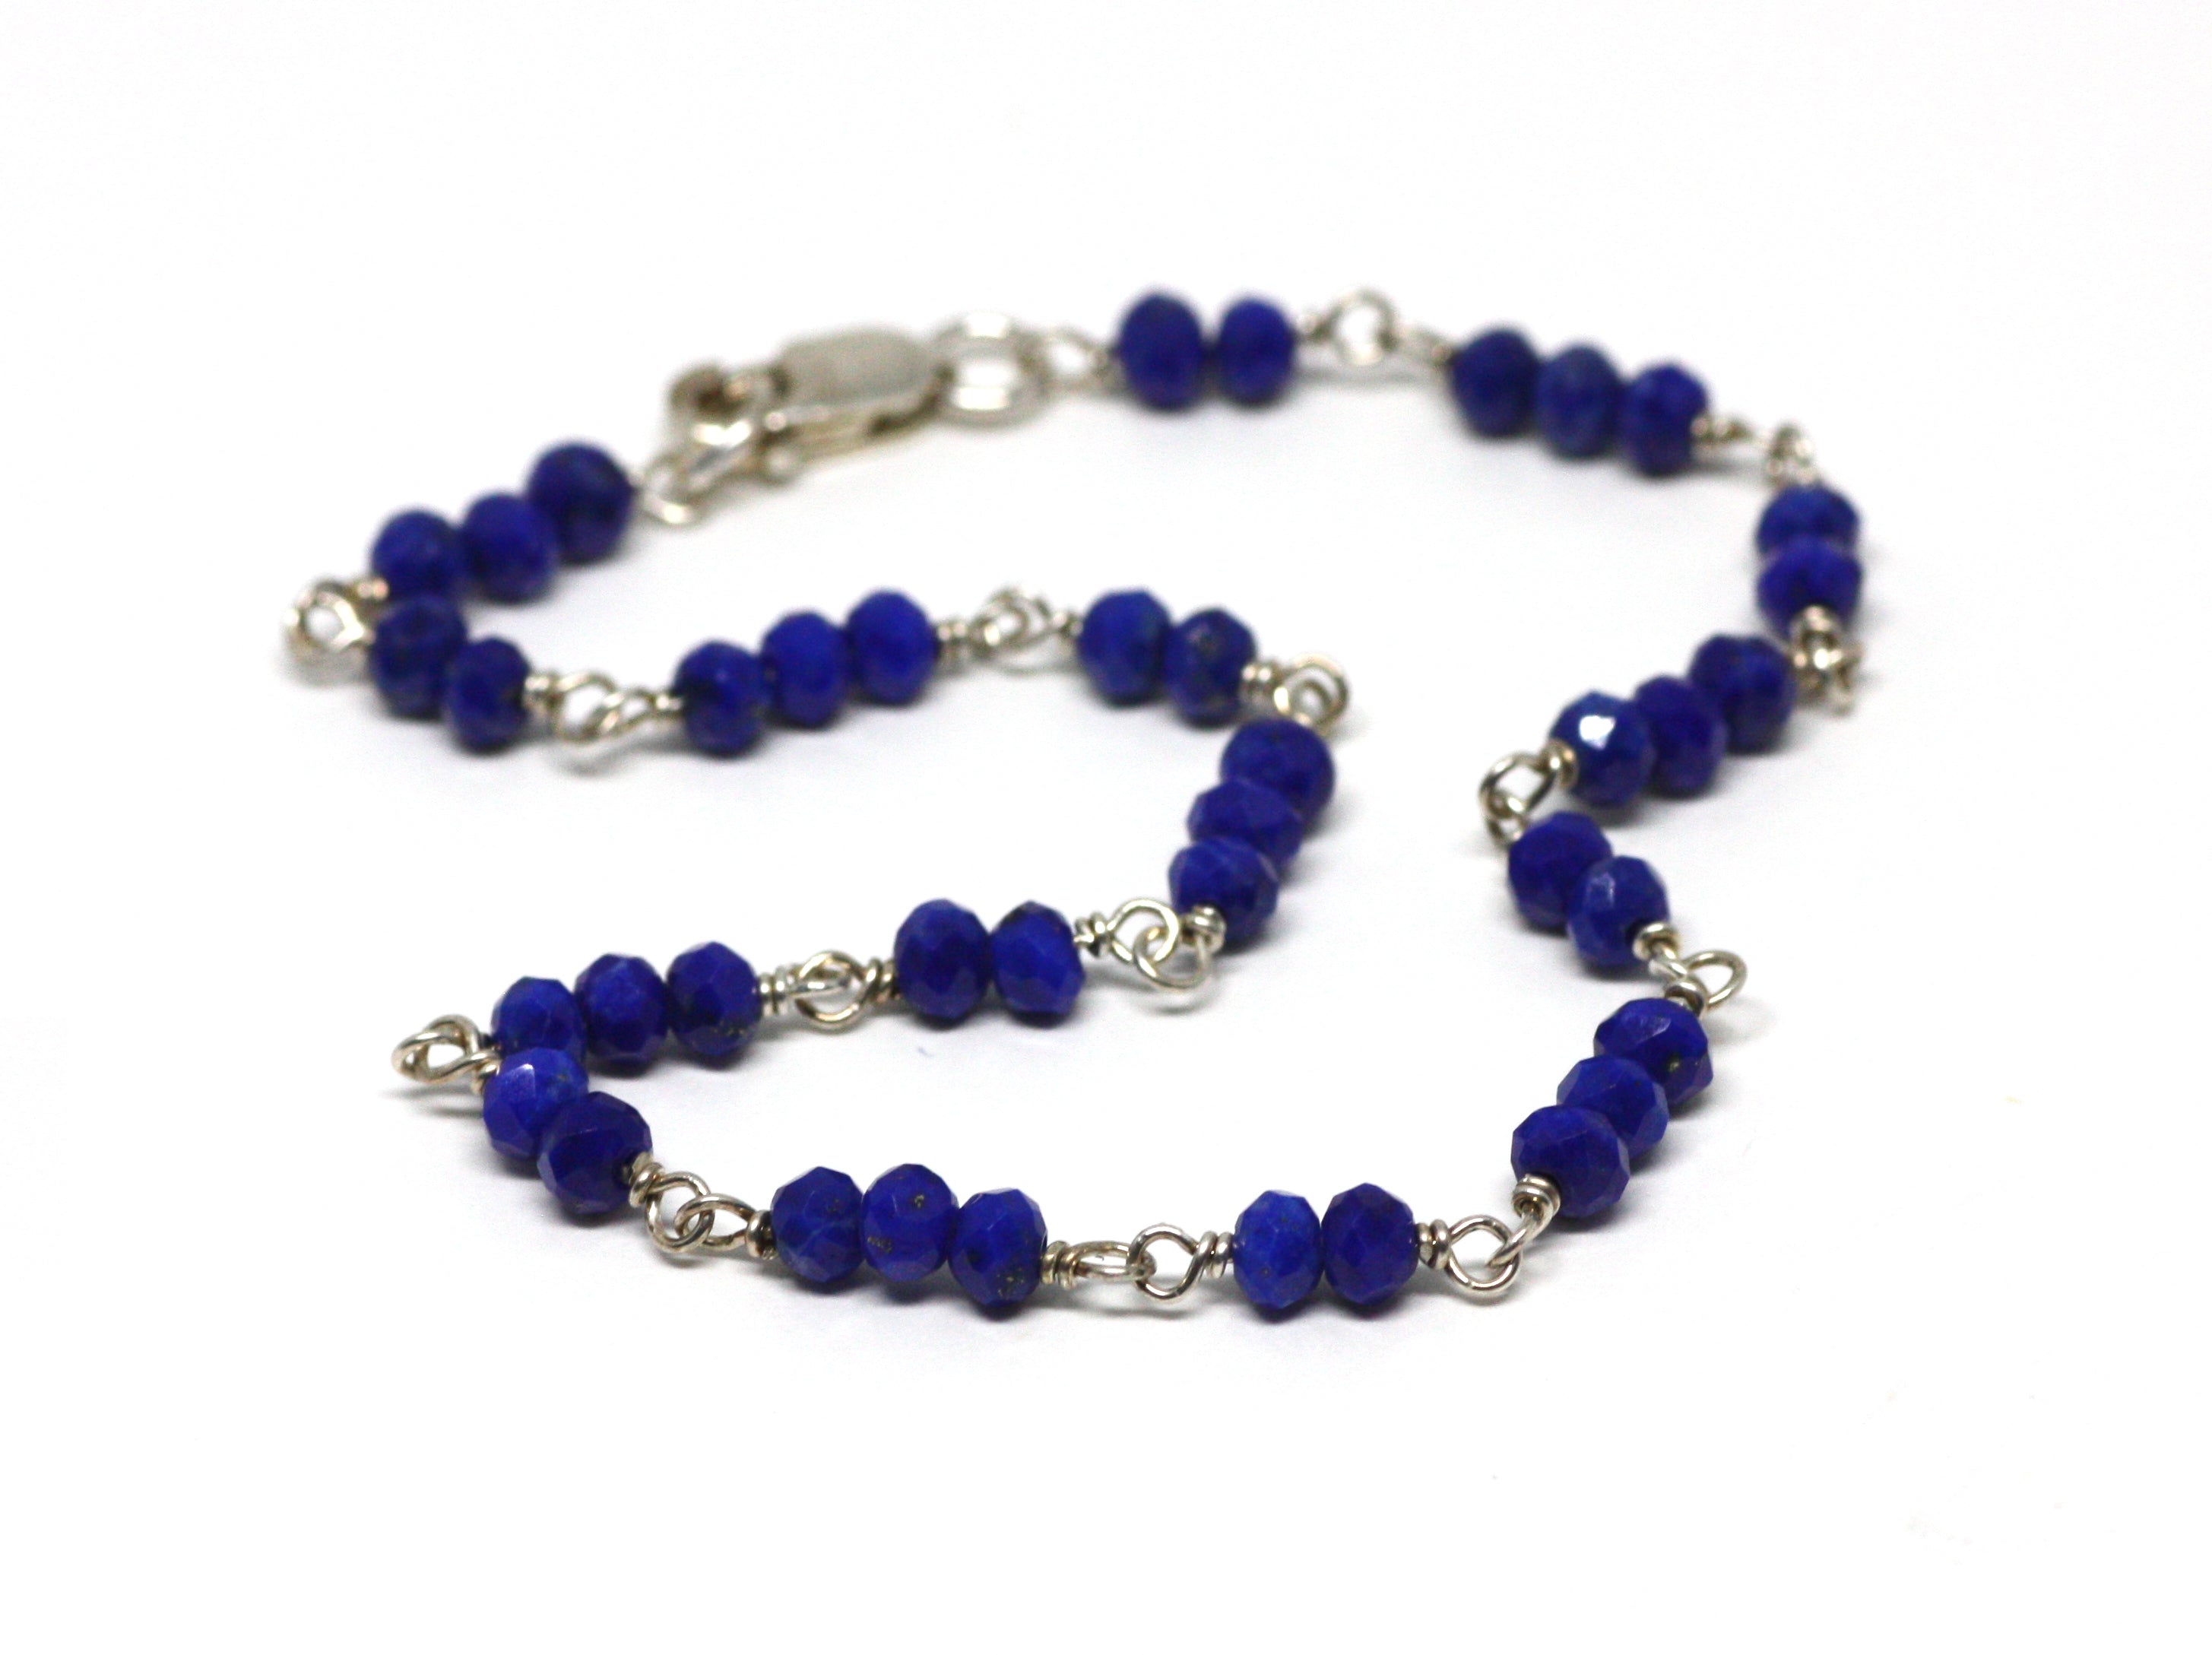 Lapis Lazuli Bracelet in Wire Wrapped Silver